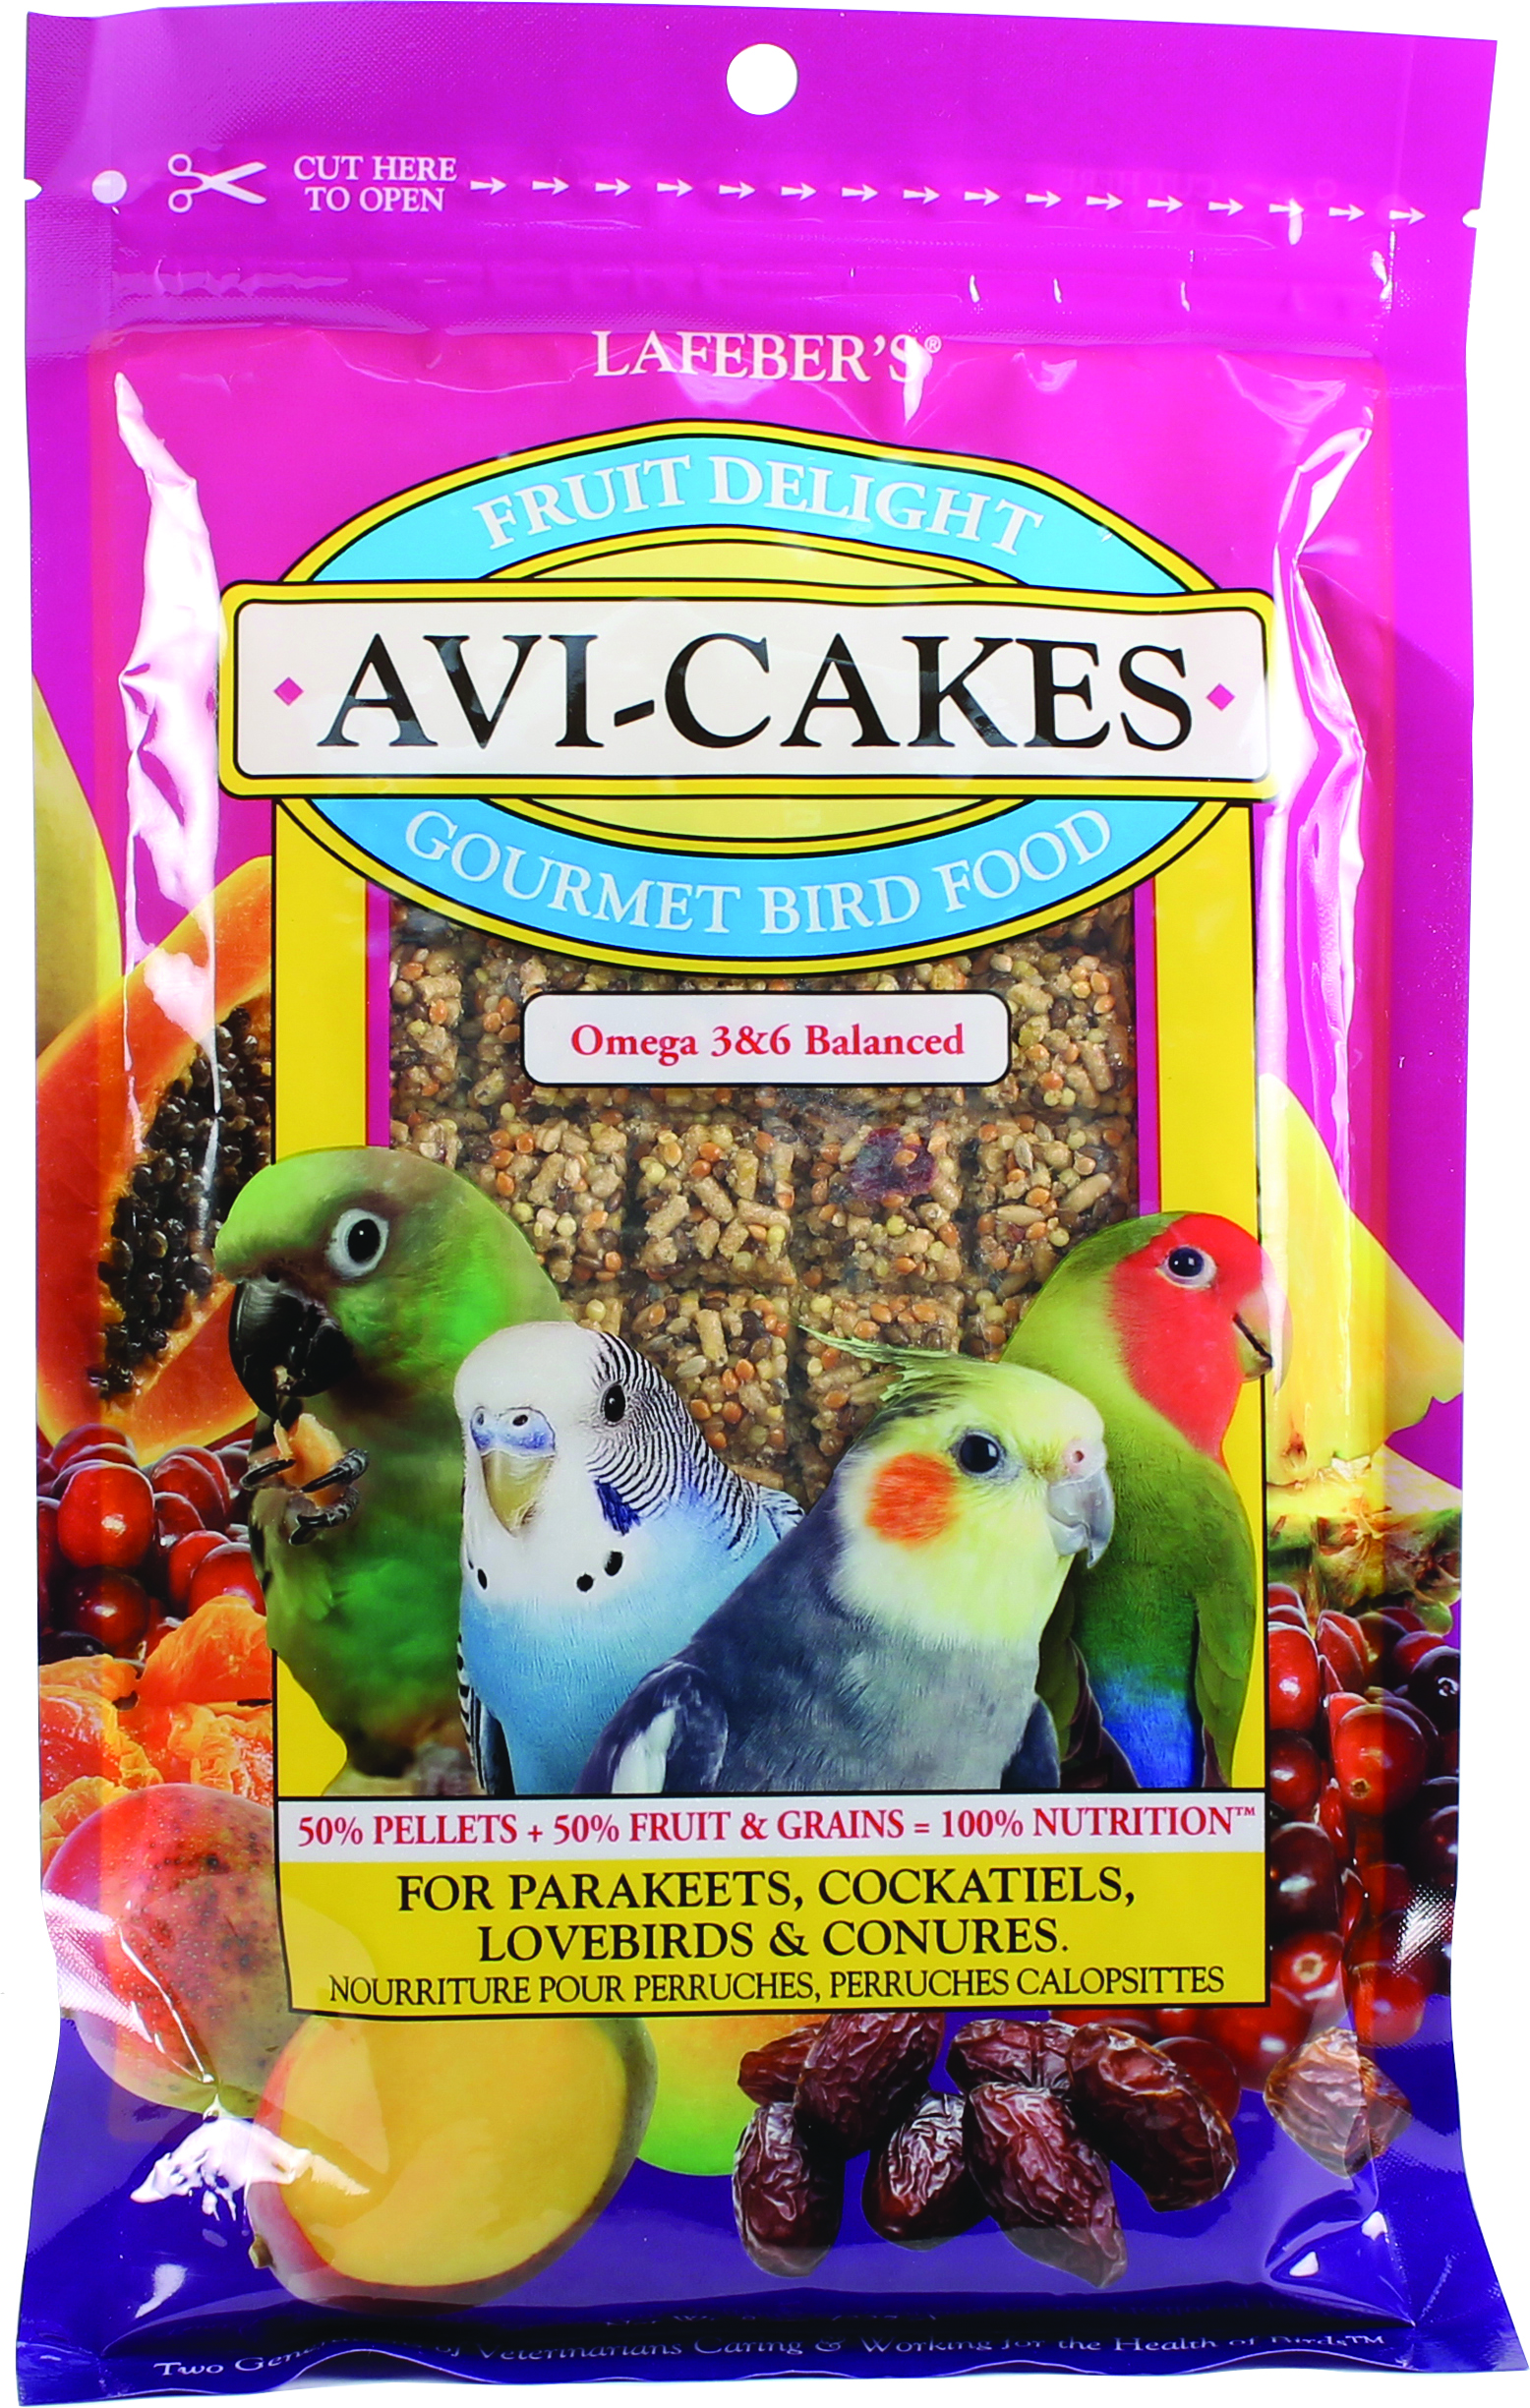 AVI-CAKES FRUIT DELIGHT GOURMET BIRD FOOD